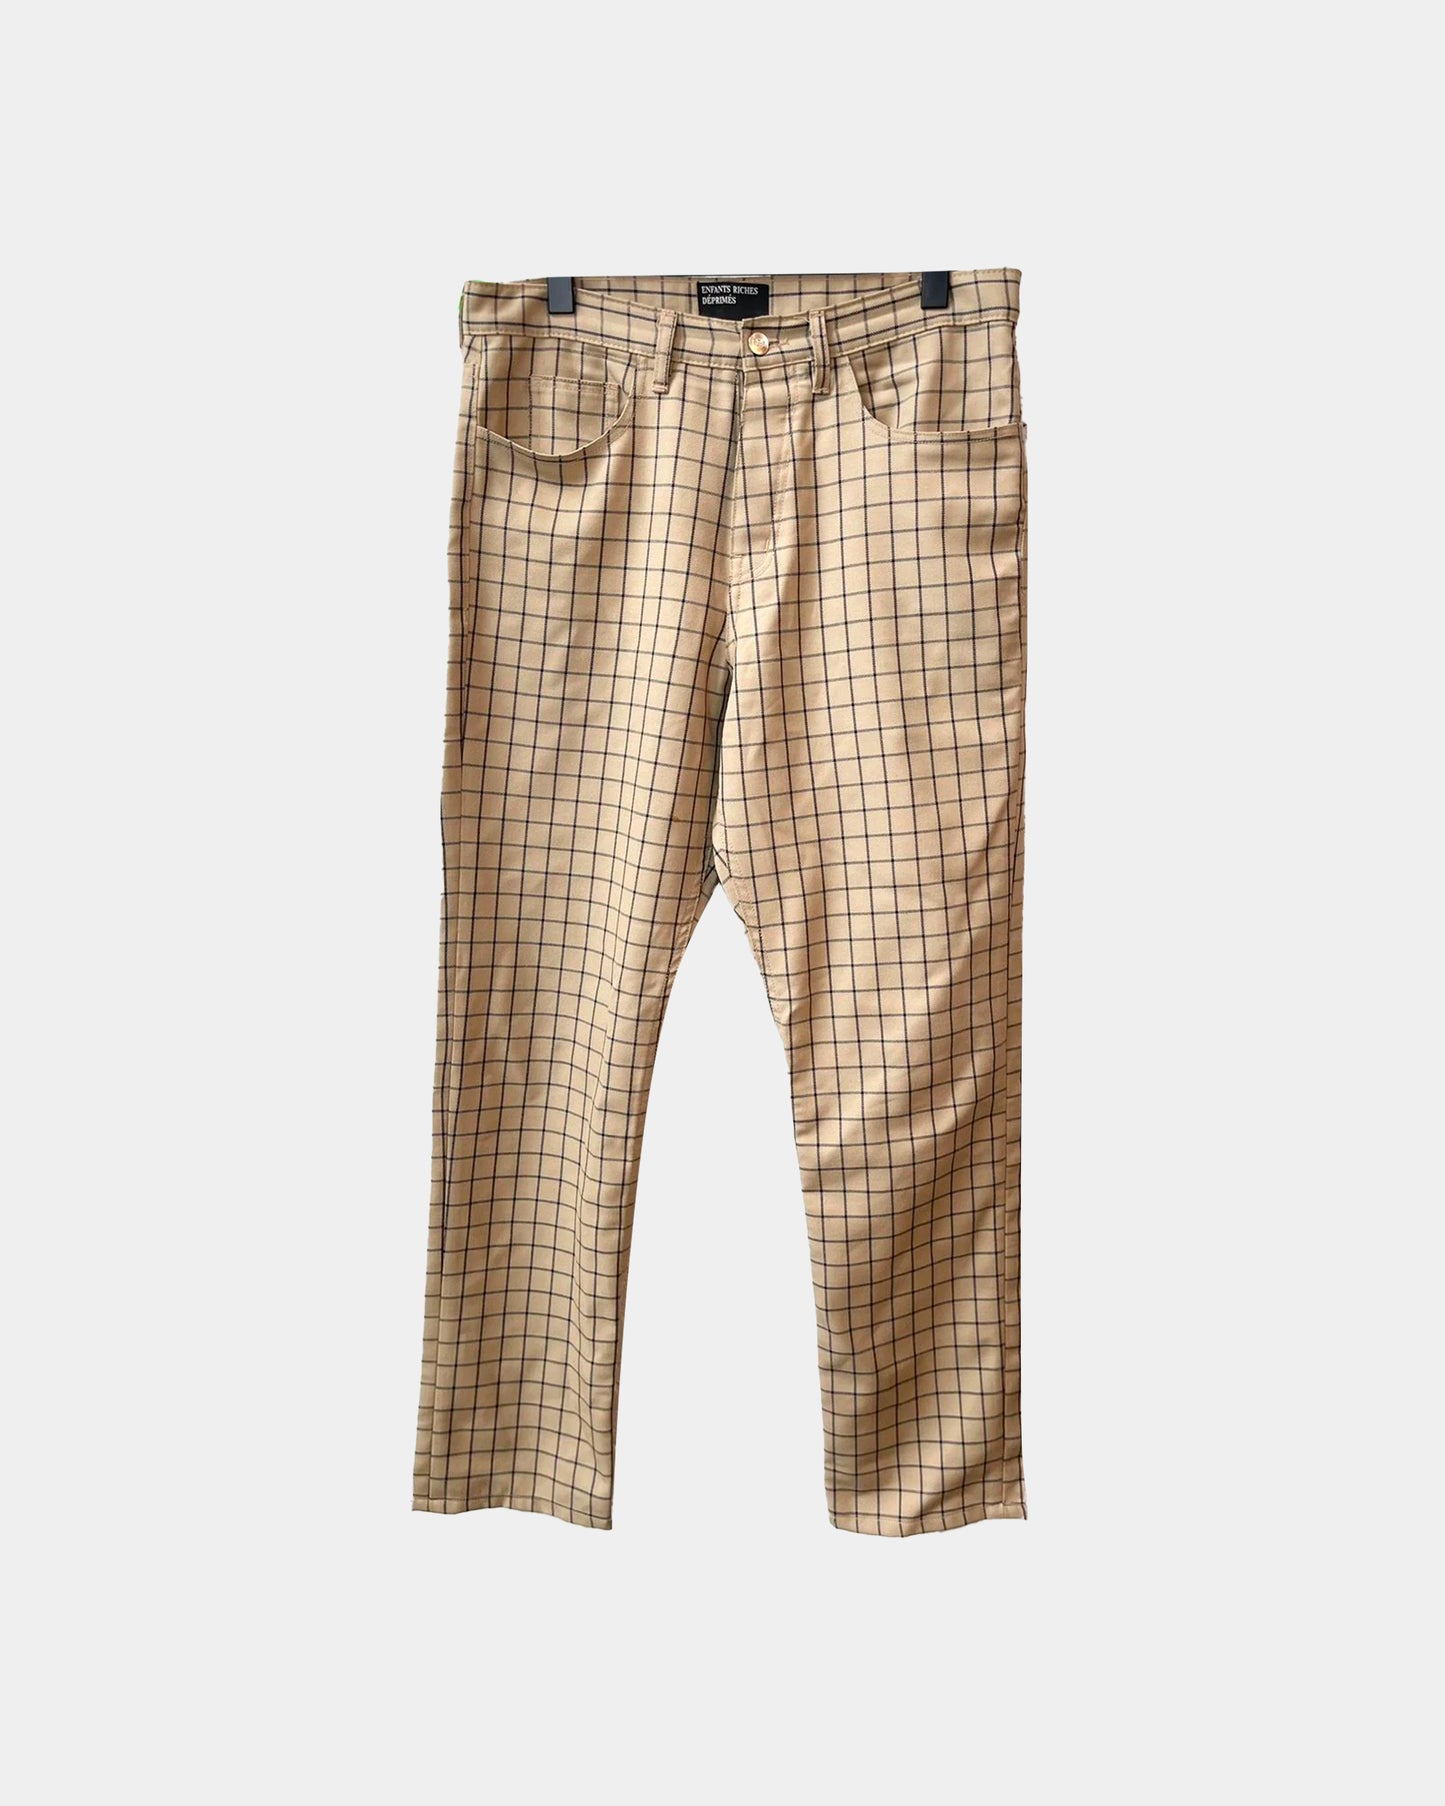 ERD Checkered Plaid Pants Trousers SZ32-34